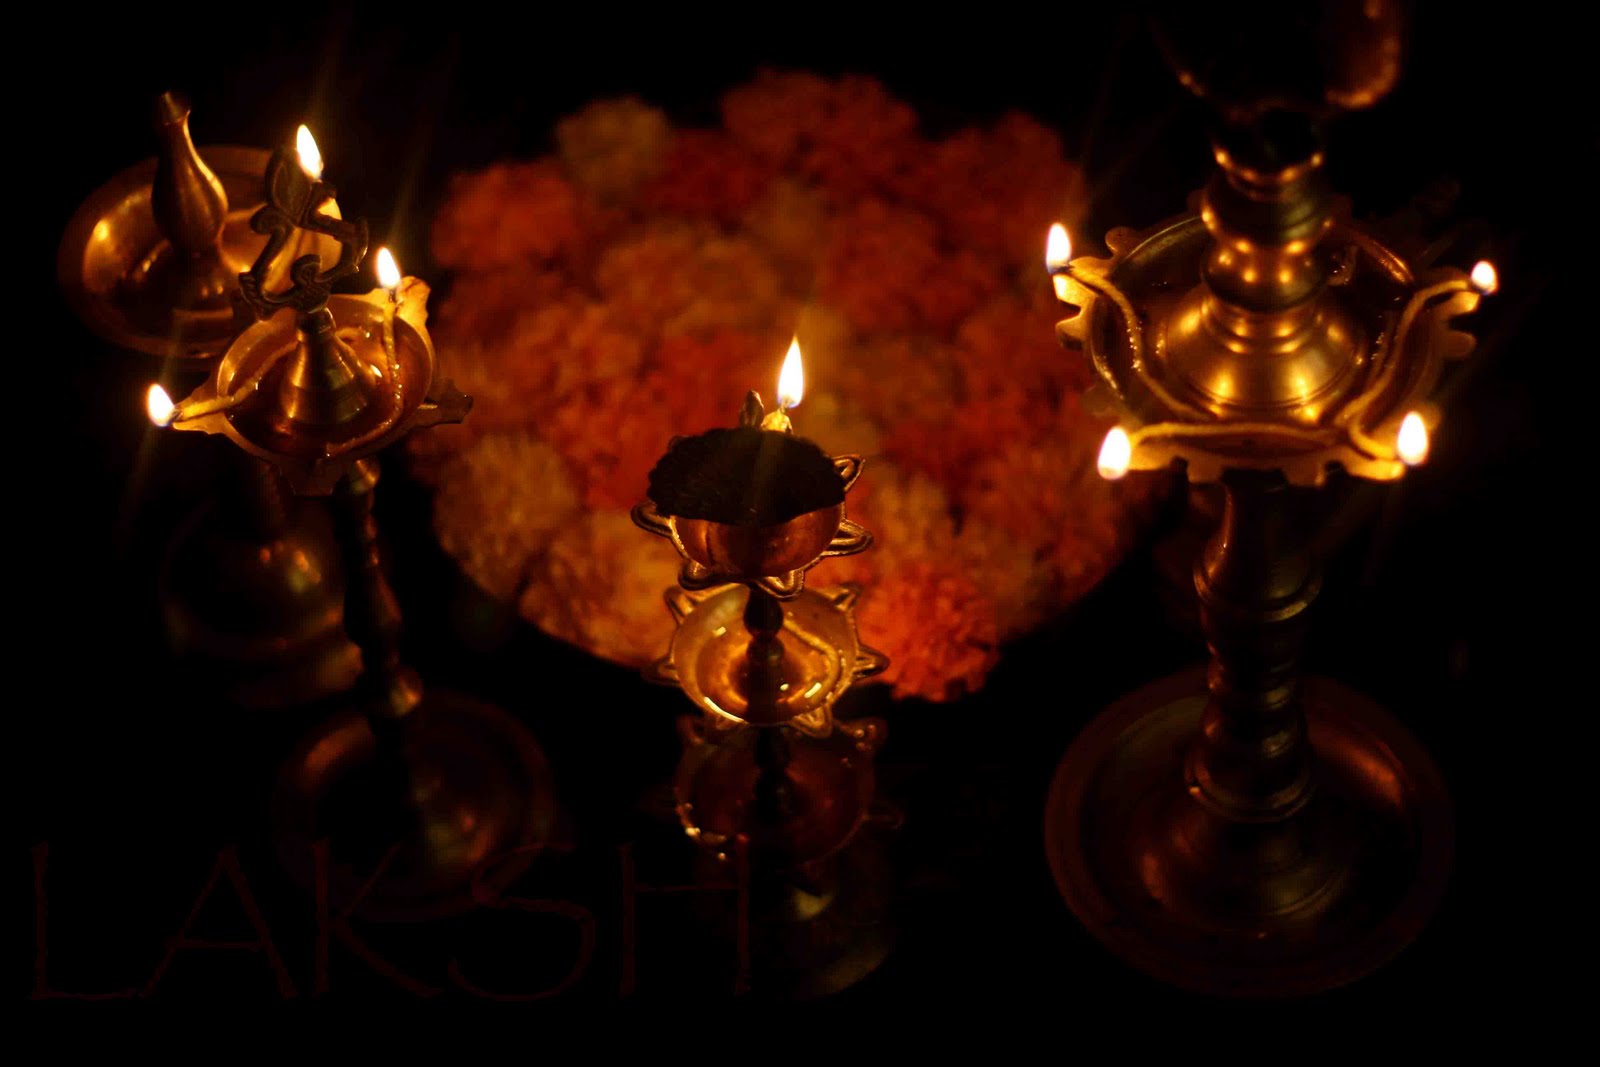 Celebrations Decor - An Indian Decor blog: Celebrating love, light and ...